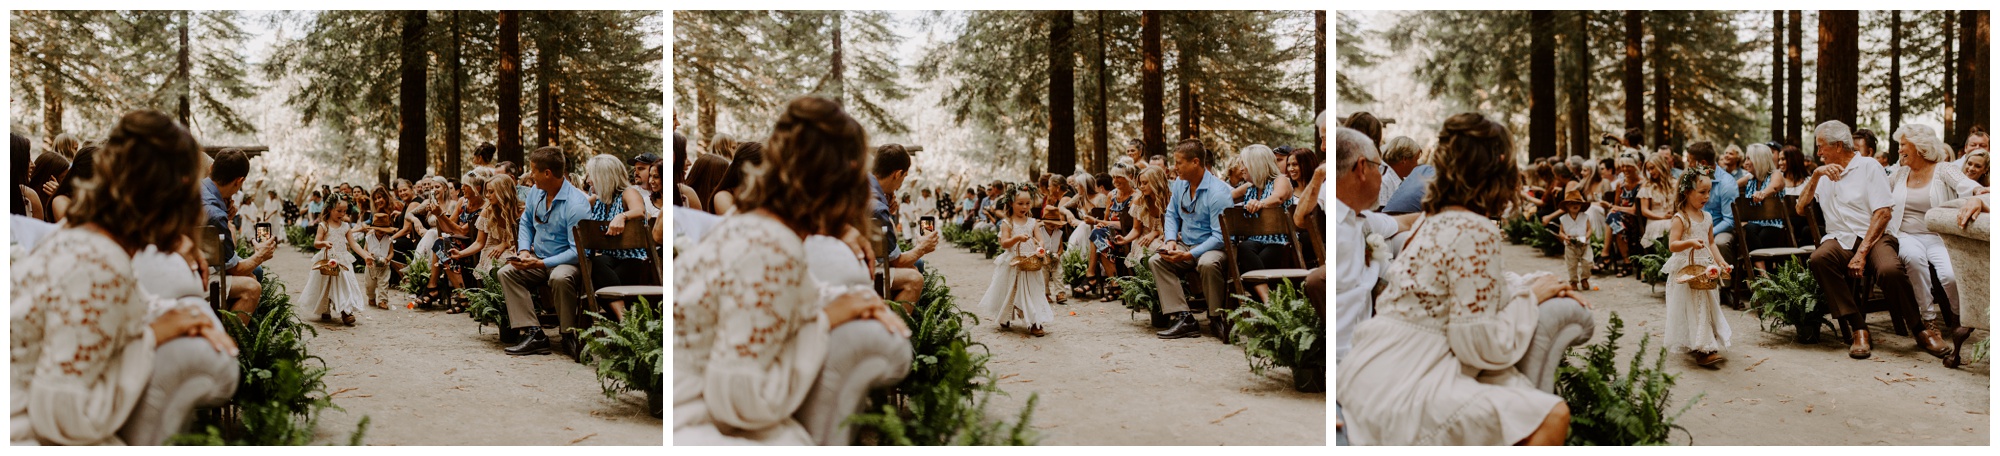 Redwood Festival Wedding Humbolt California - Jessica Heron Images_0032.jpg